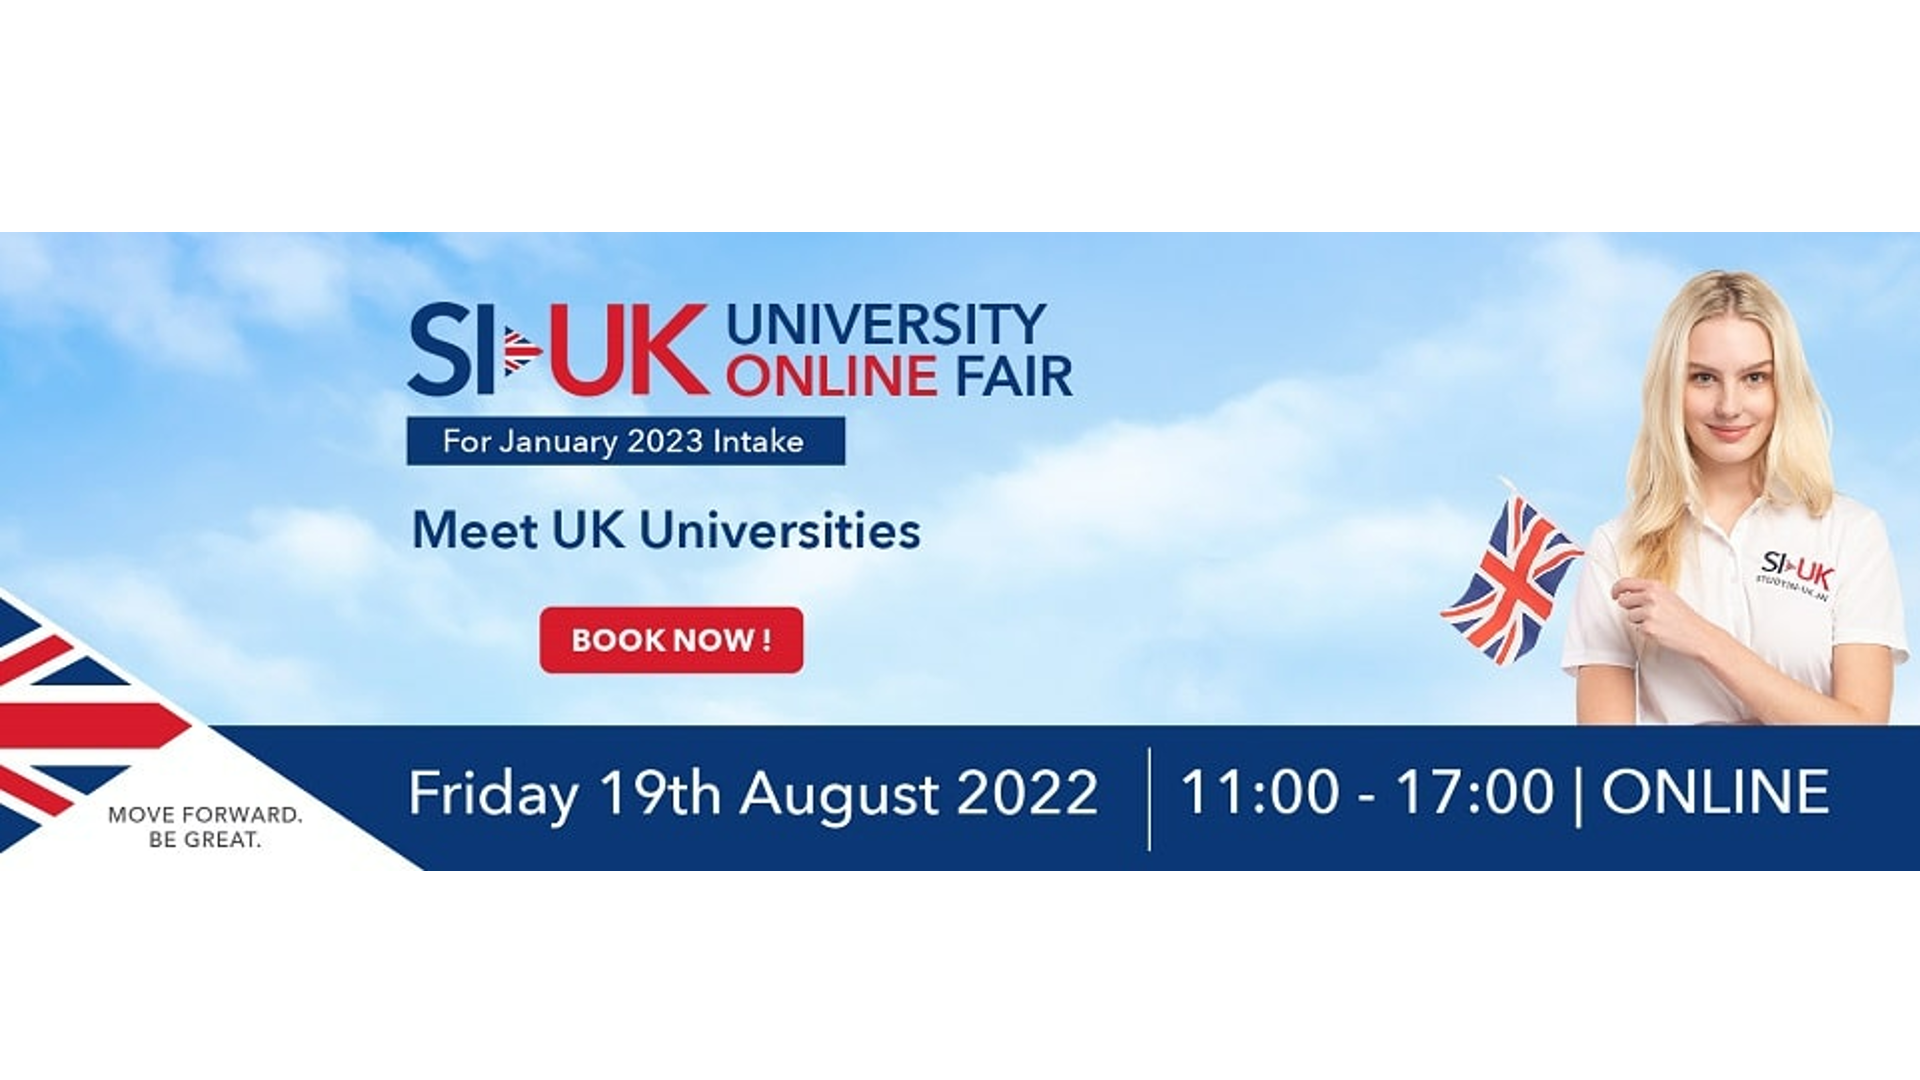 SI-UK University Fair Delhi 2022, Online Event